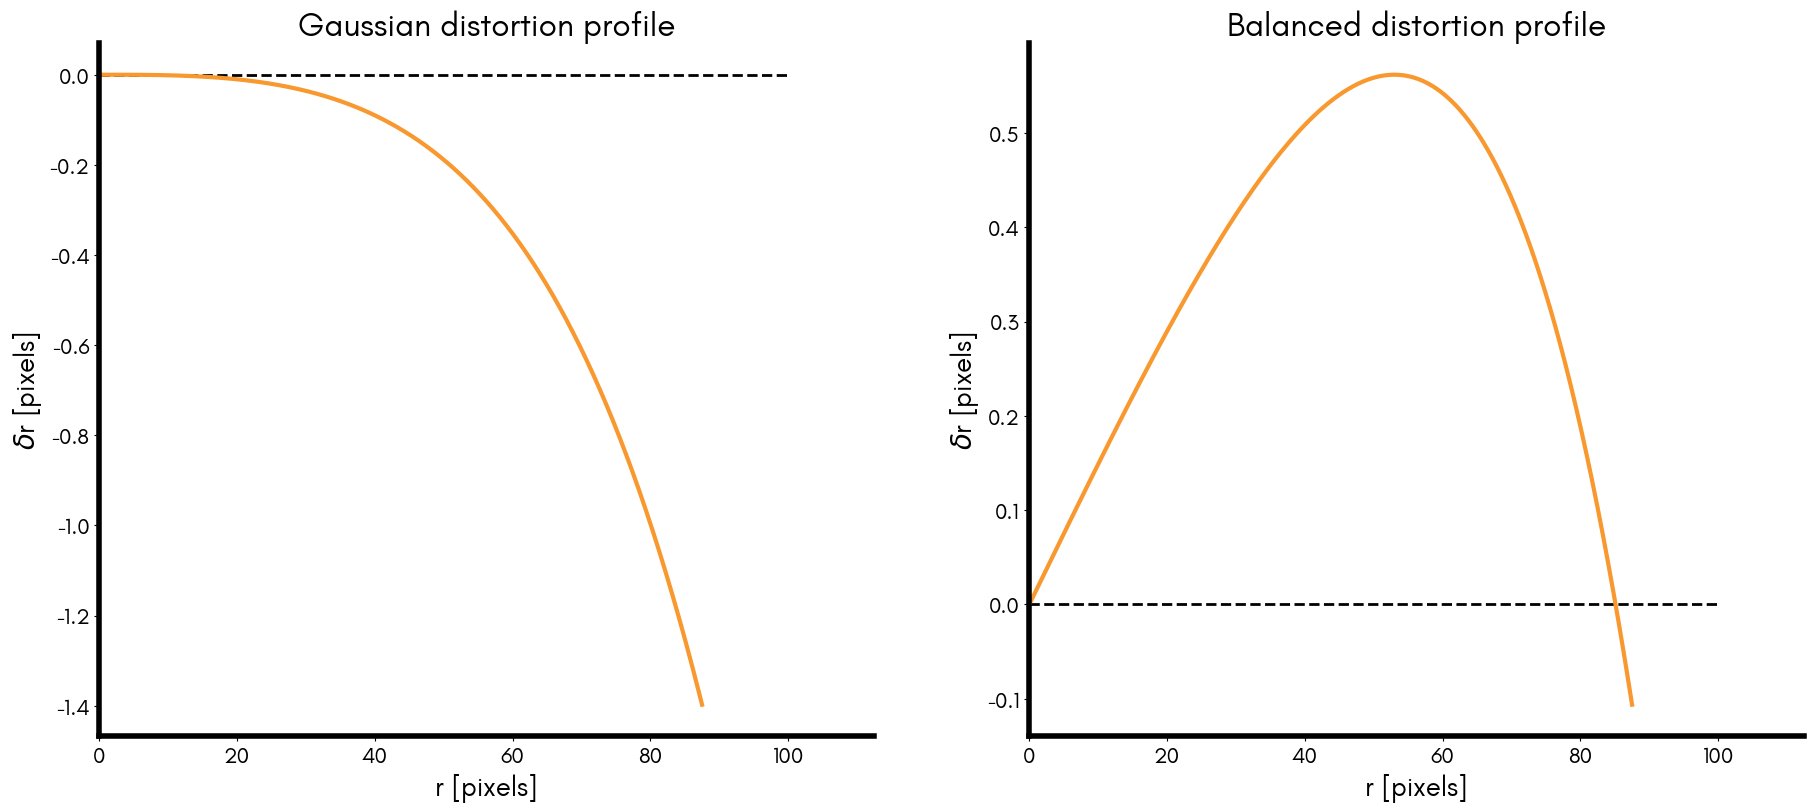 Gaussian and Balanced distortion profiles